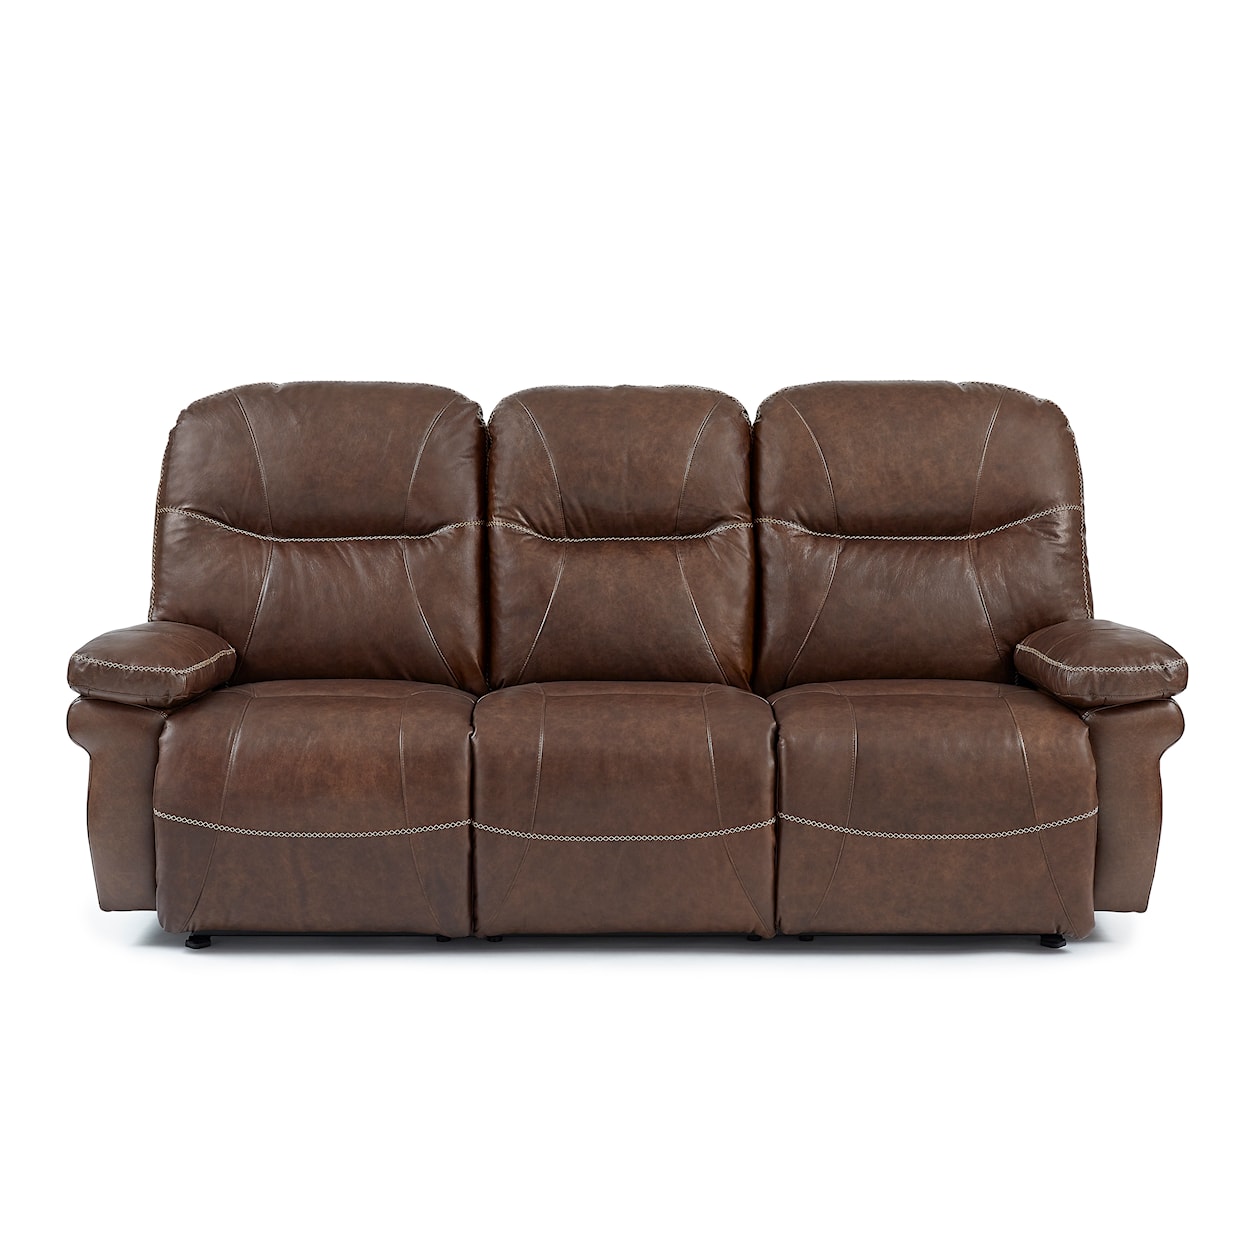 Best Home Furnishings Leya Leather Reclining Sofa